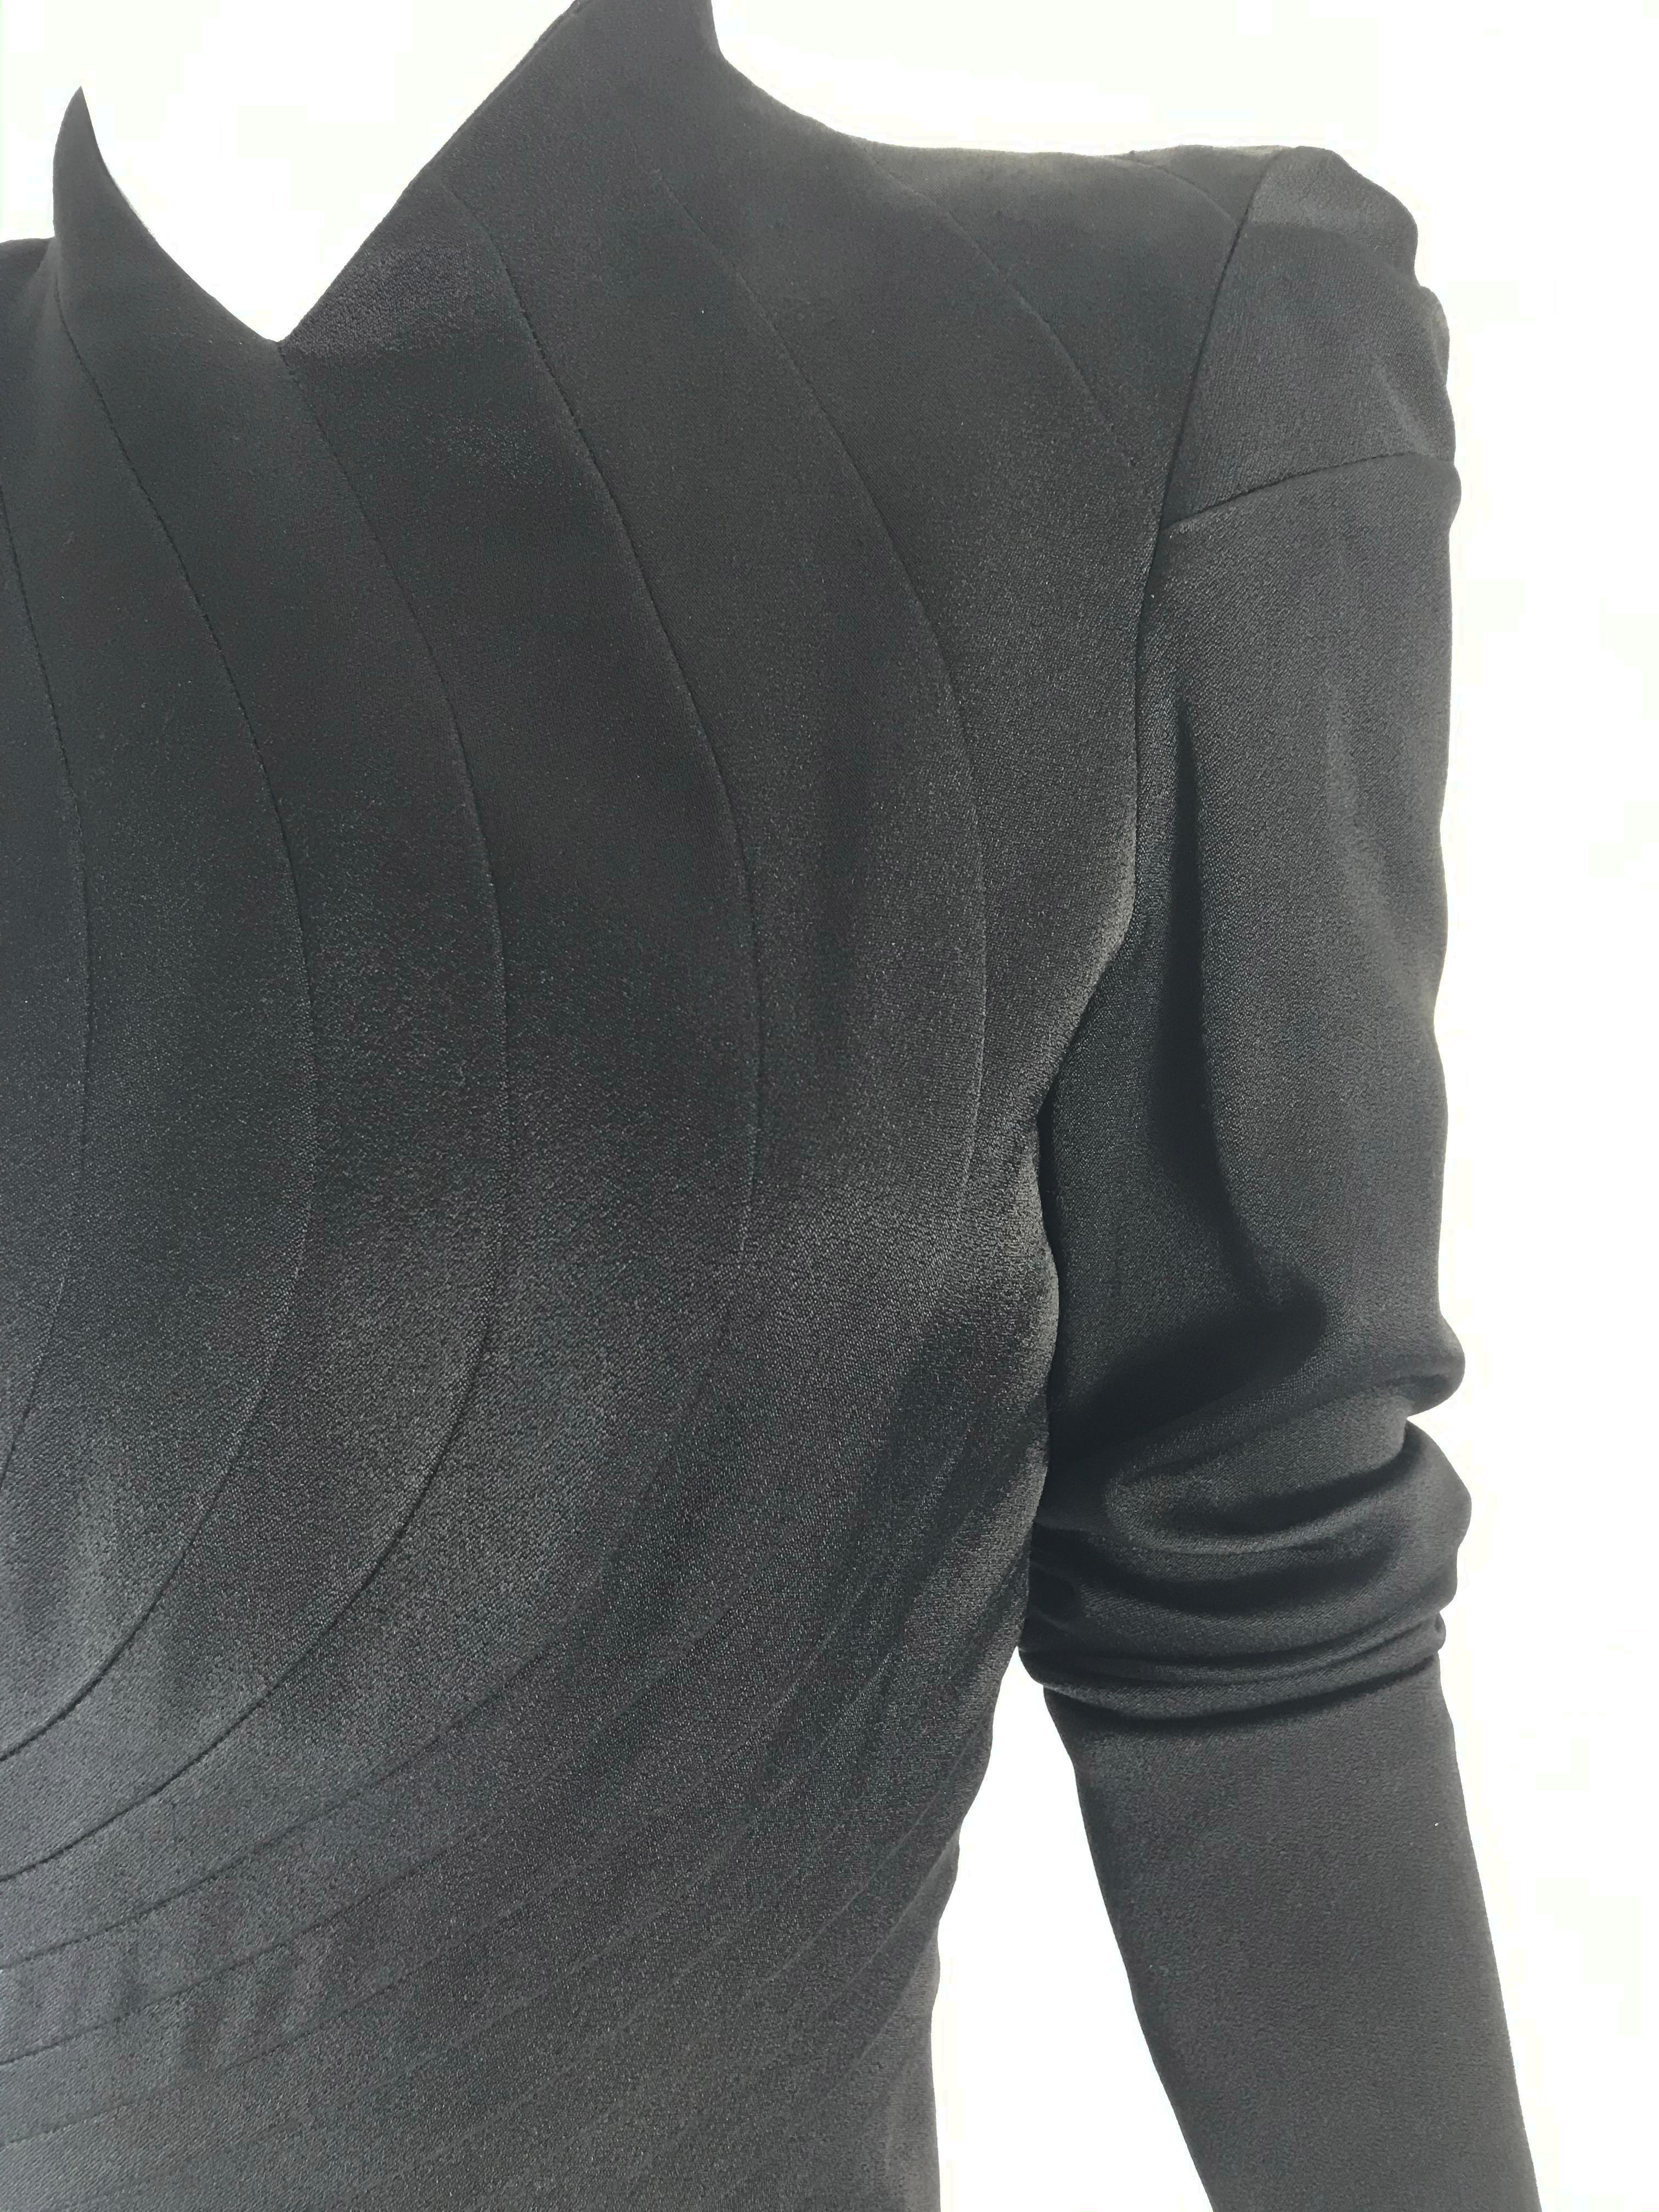 Black 1990s black John Galliano dress with diagonal seams